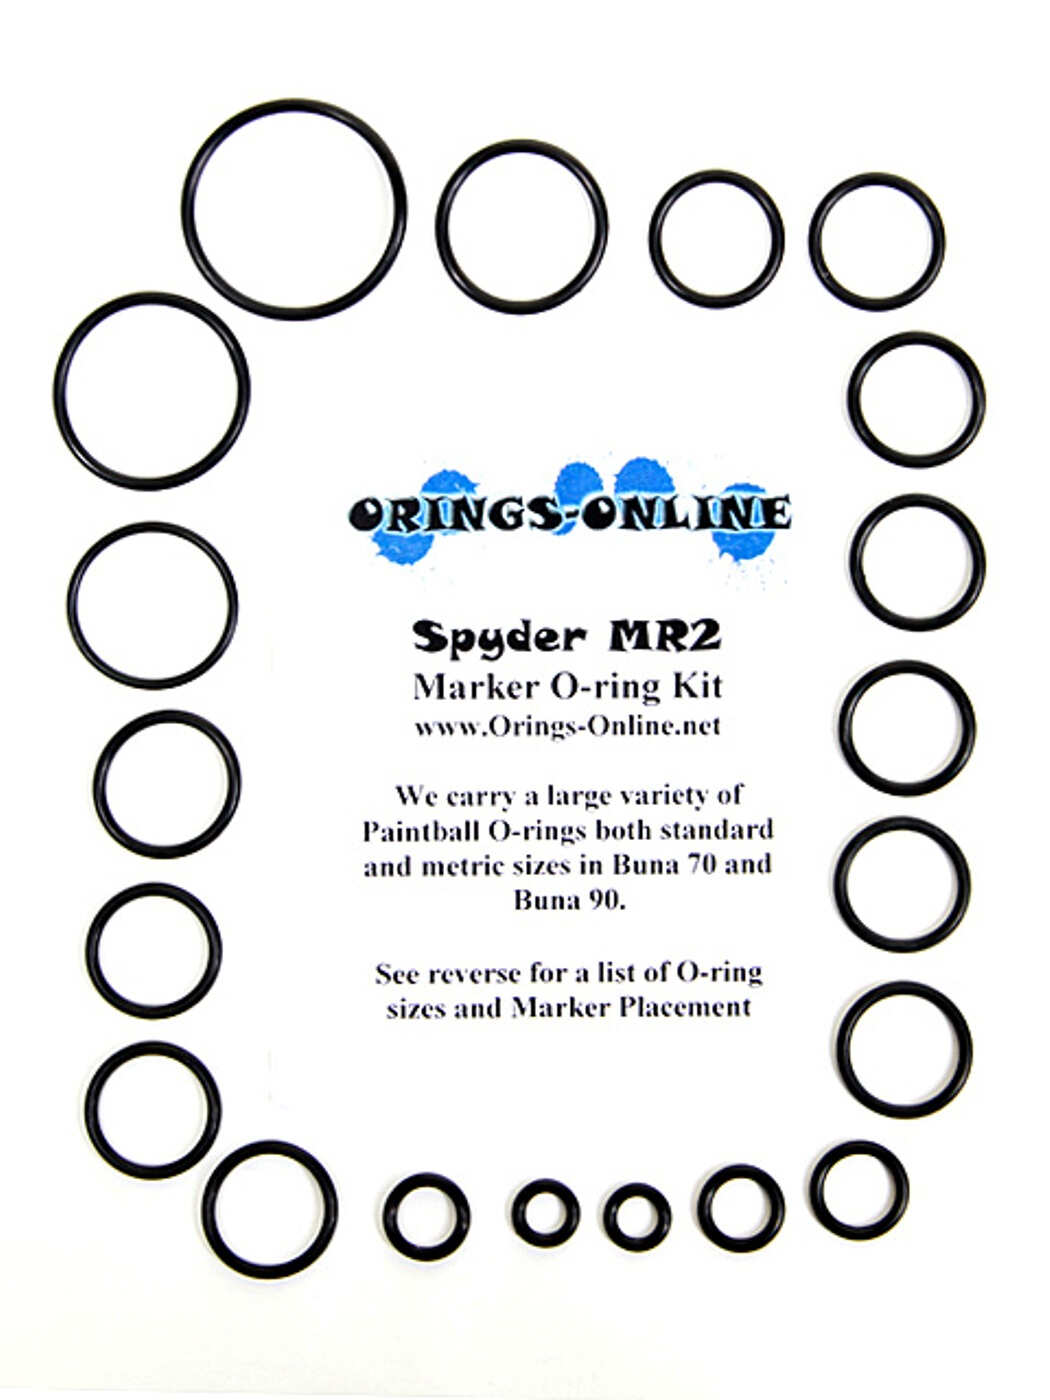 Spyder MR2 Marker O-ring Kit